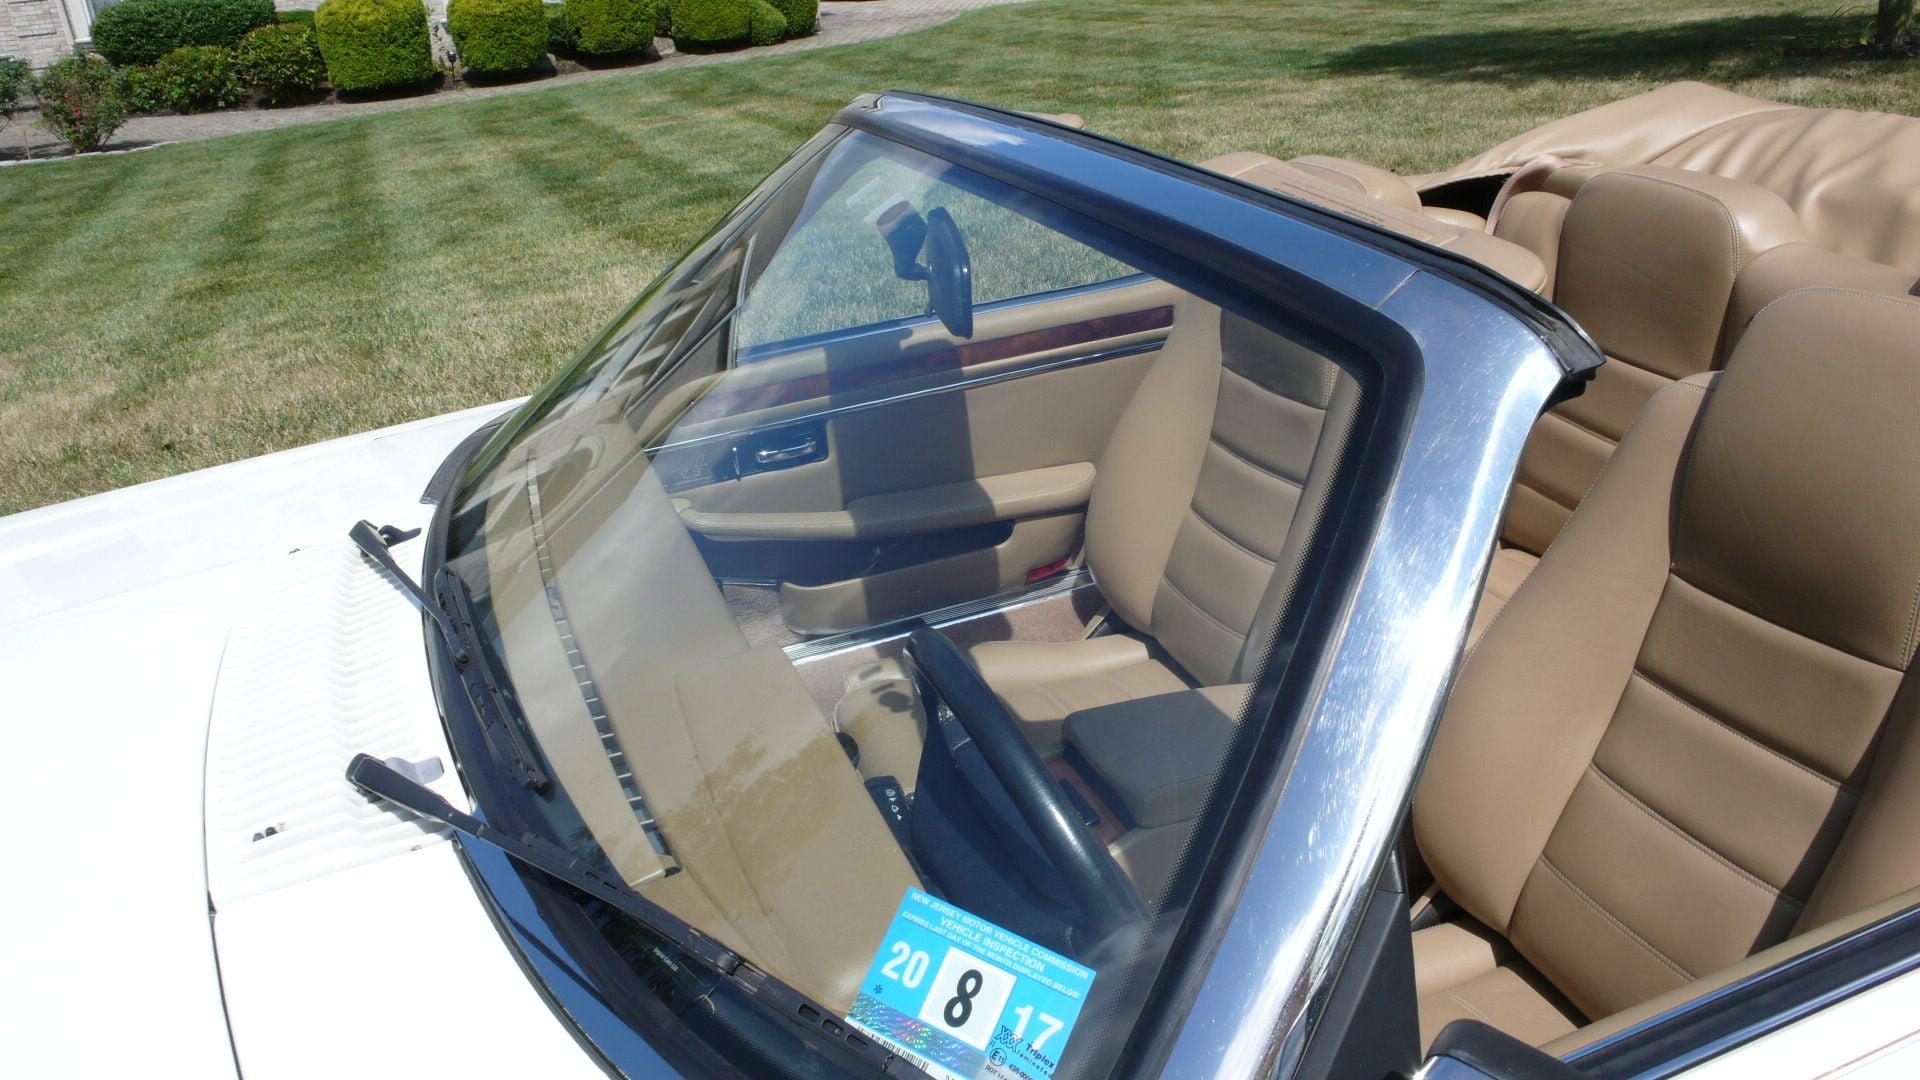 1995 Jaguar XJS - 1995 XJS convertible, 4.0 I6 - Used - VIN SAJNX2743SC196850 - 35,500 Miles - 6 cyl - 2WD - Automatic - Convertible - White - Ardmore, PA 19003, United States